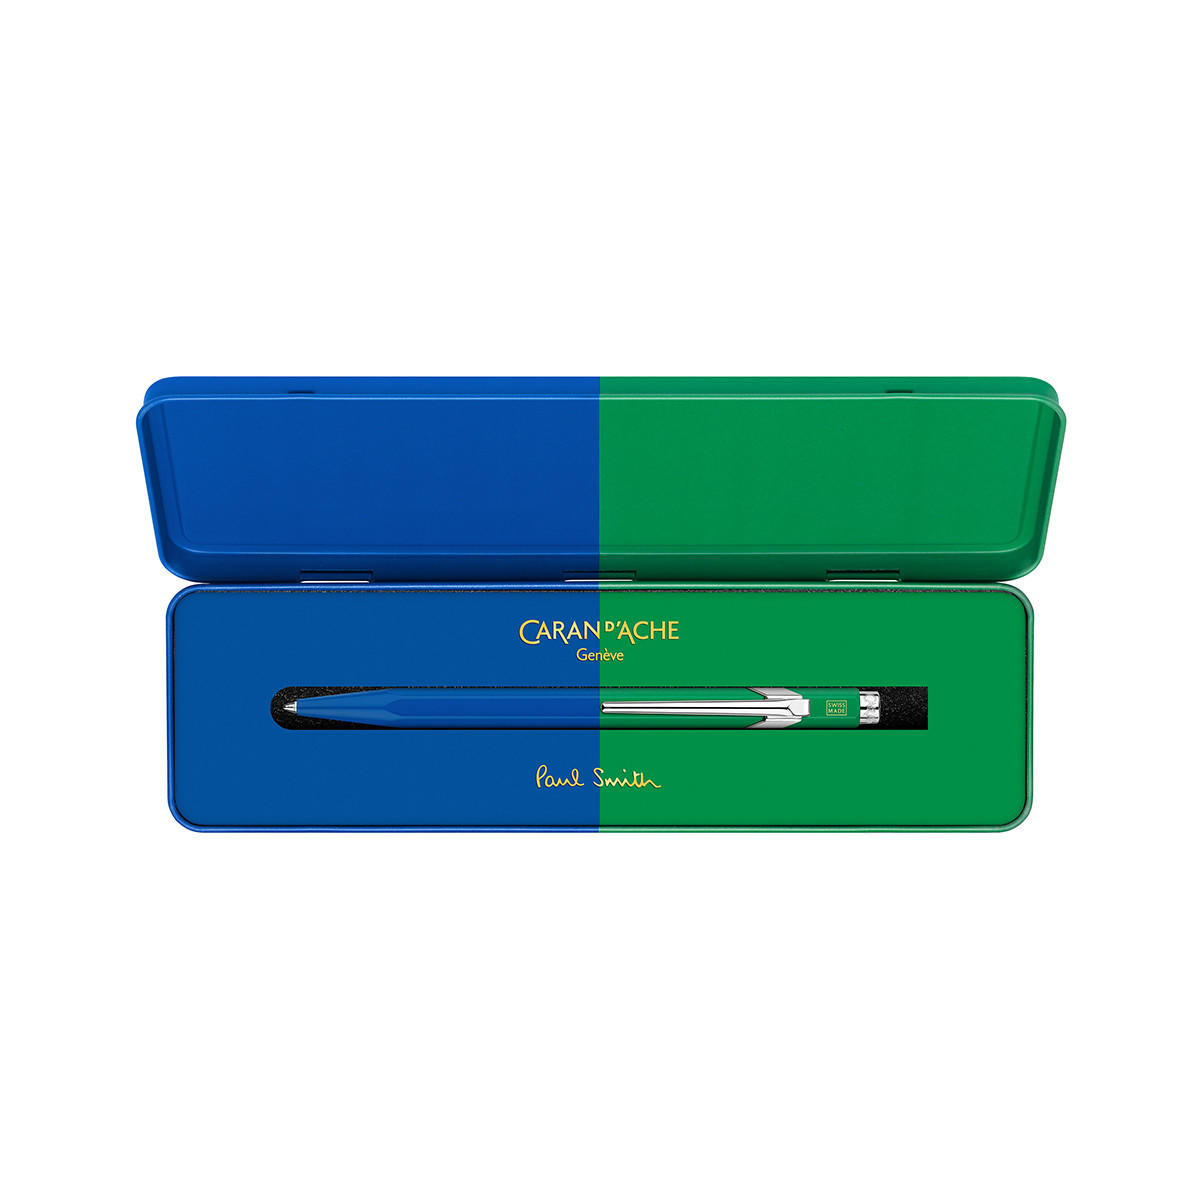 Caran D’ache 849 Ballpoint Pen in Slimpack Paul Smith Edition Cobalt/Emerald Green